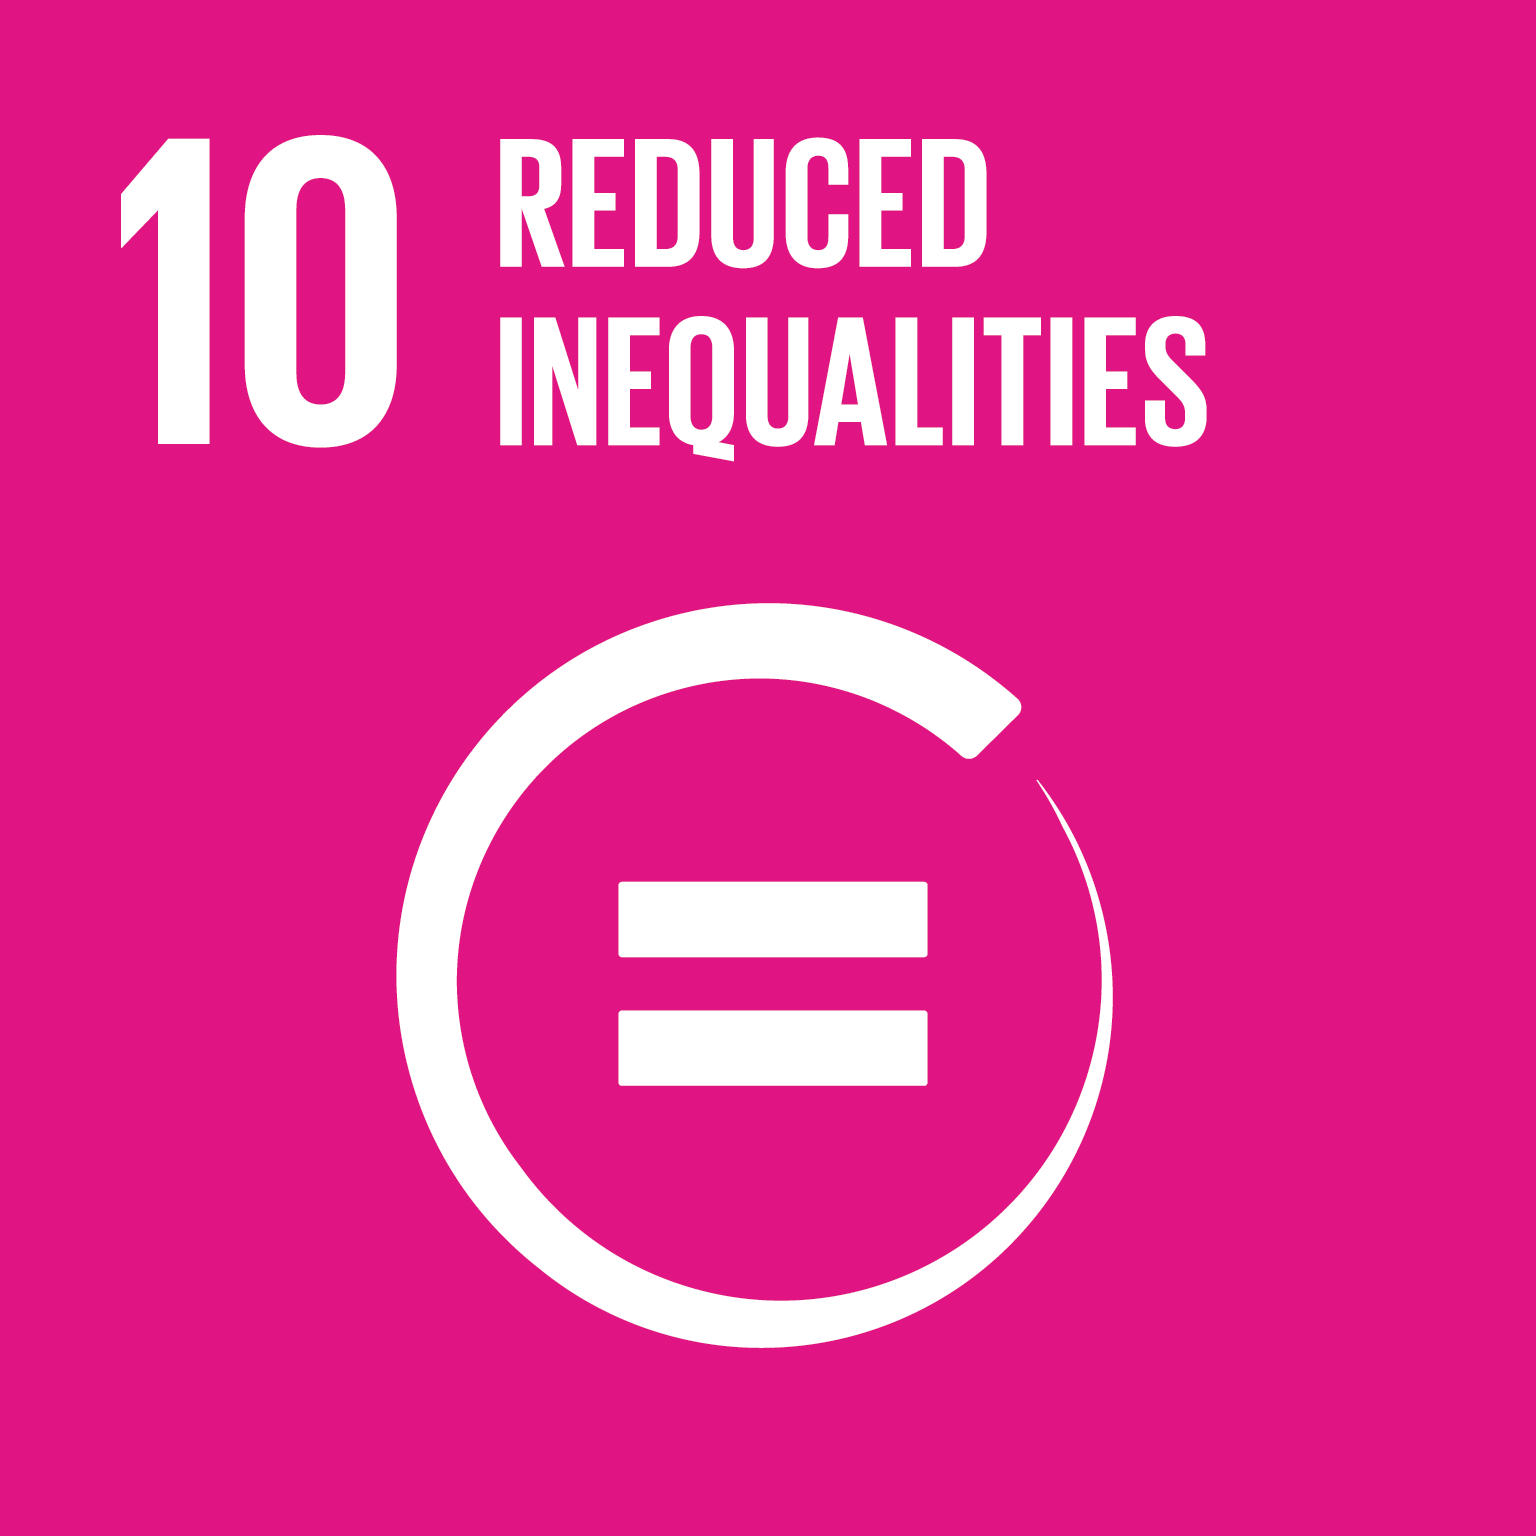 SDG 10, reduce inequalities